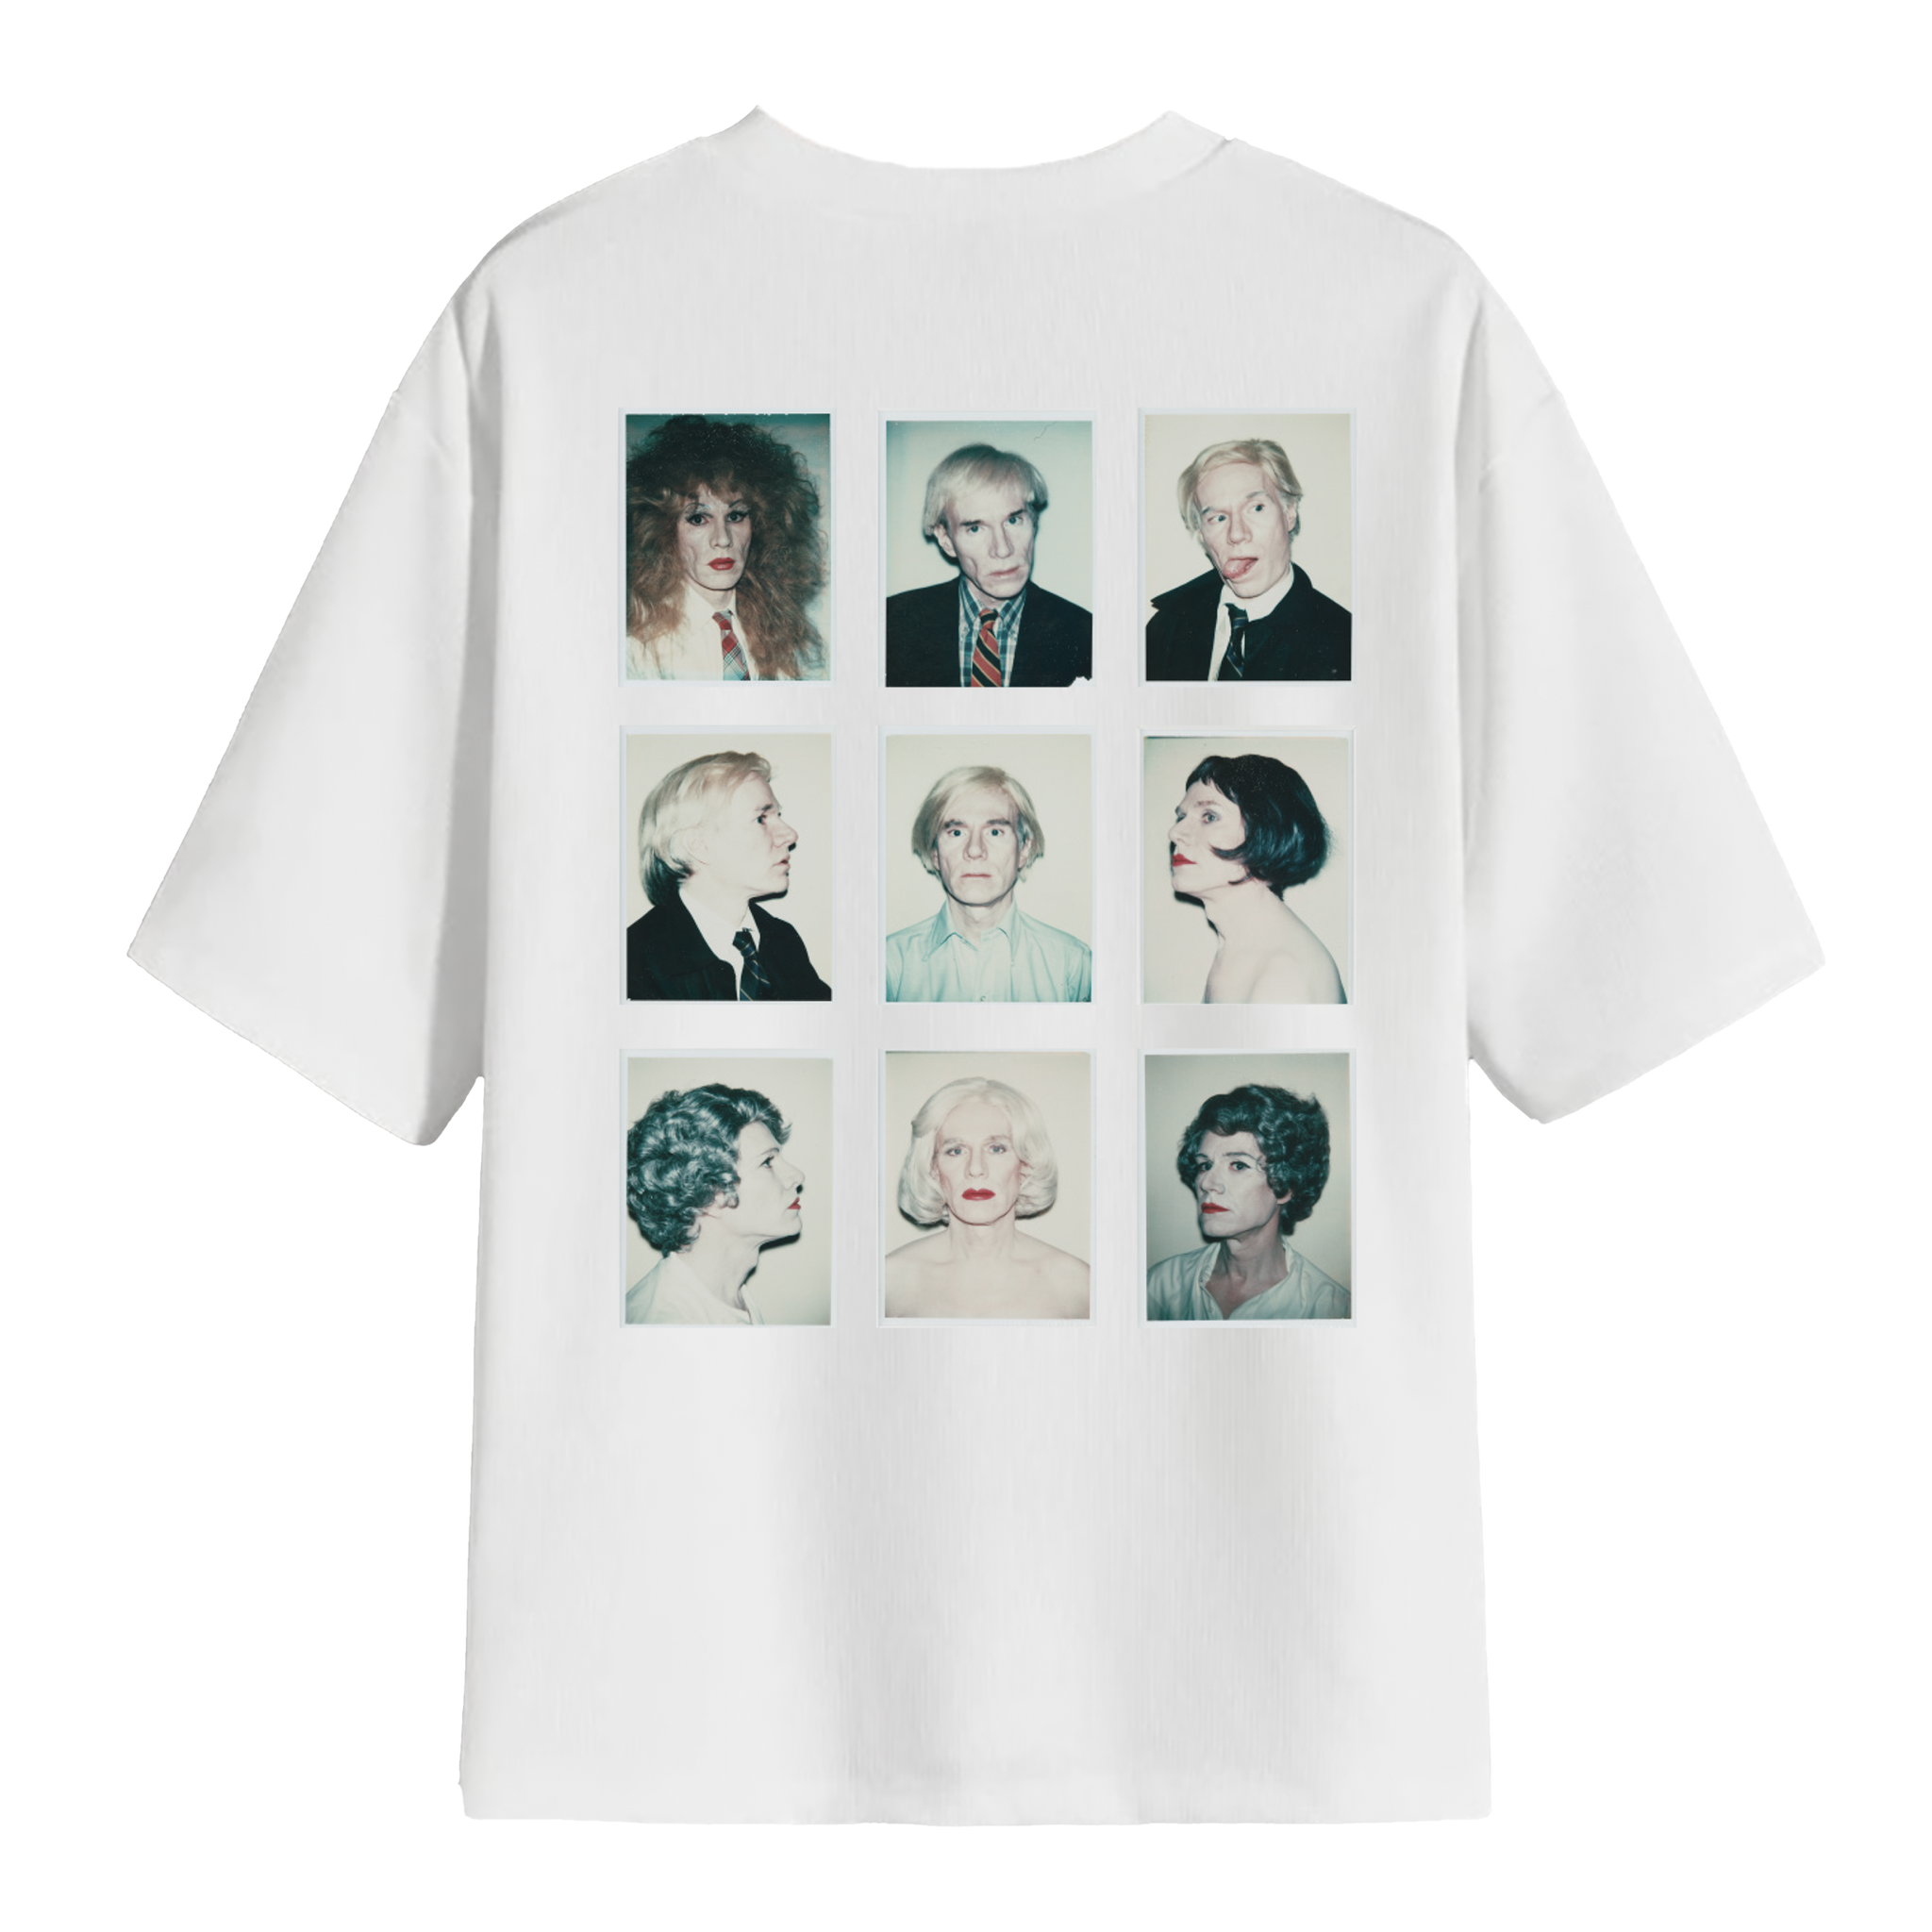 Andy Warhol "Polaroid" T-Shirt